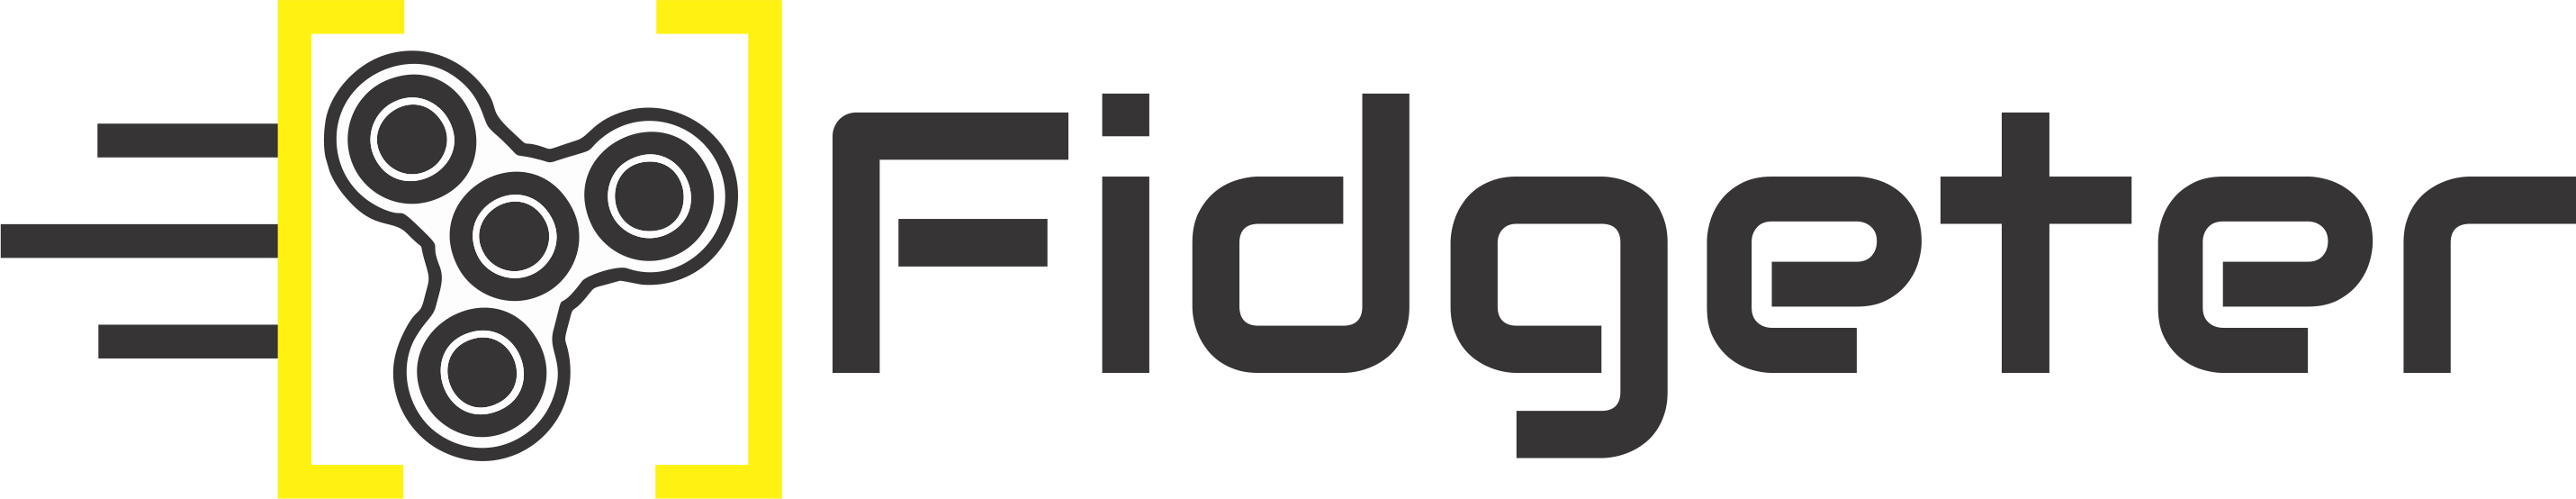 Fidget spinner with Logos